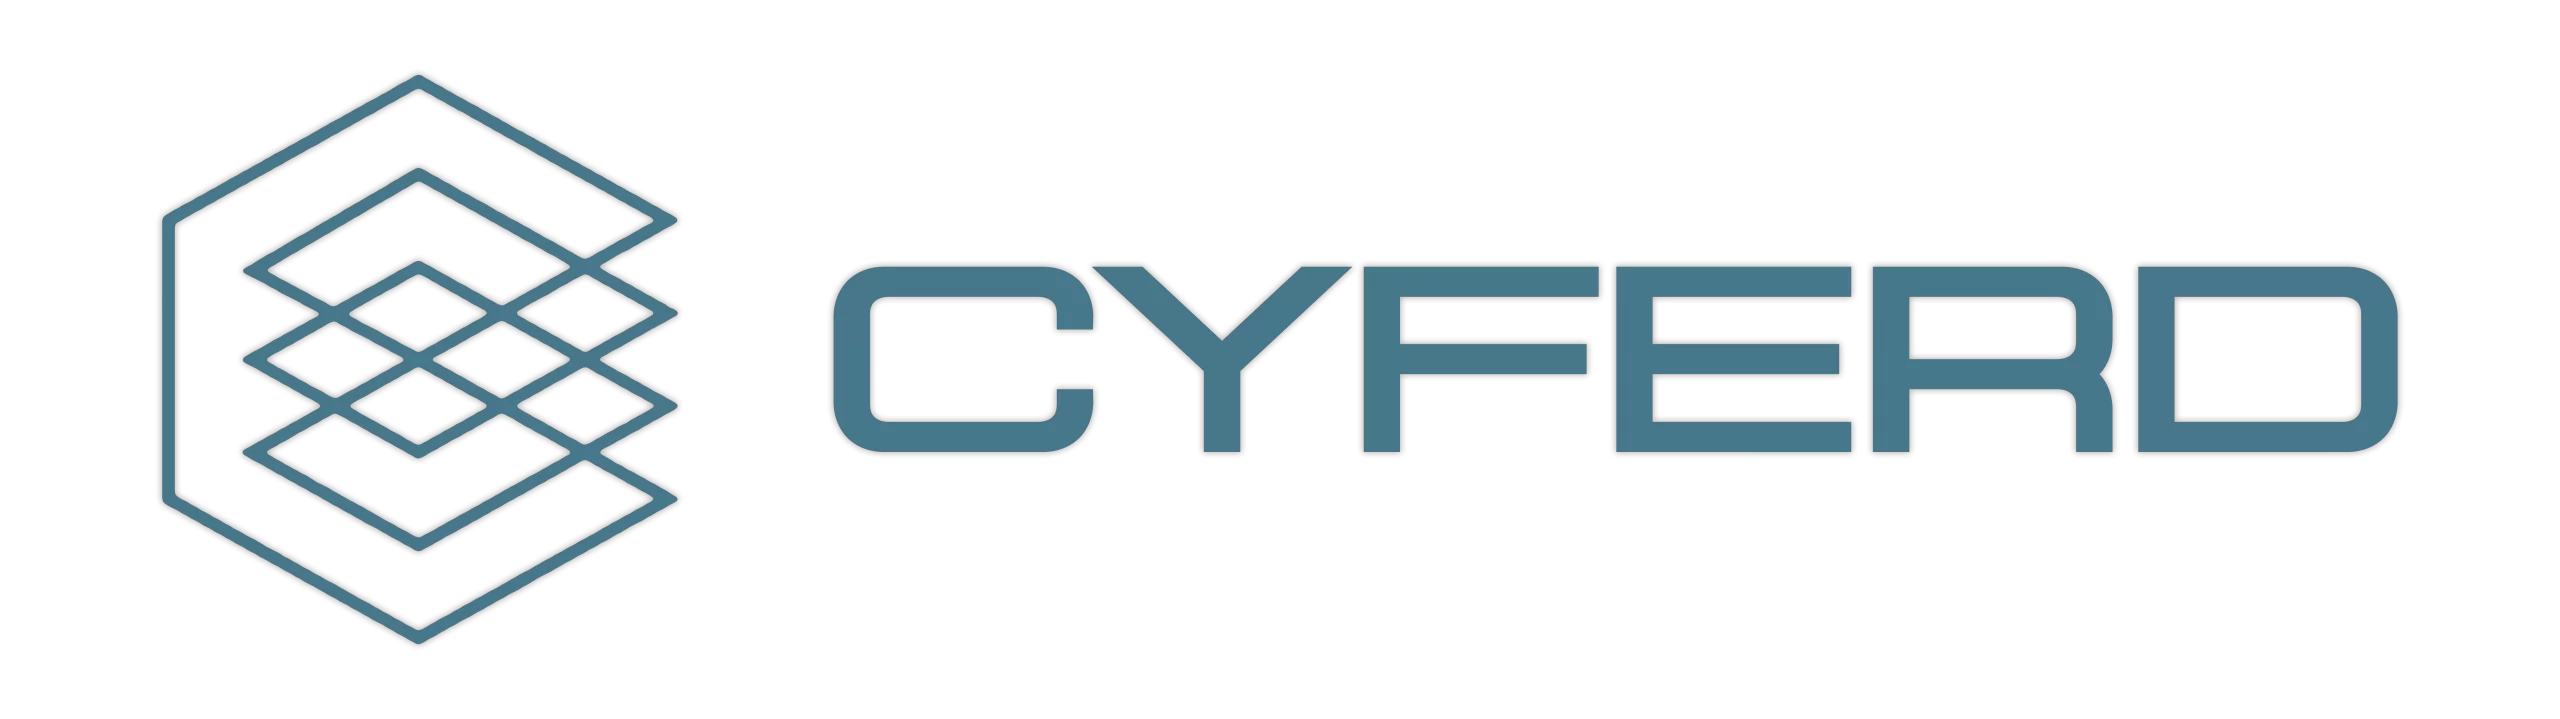 Cyferd logo